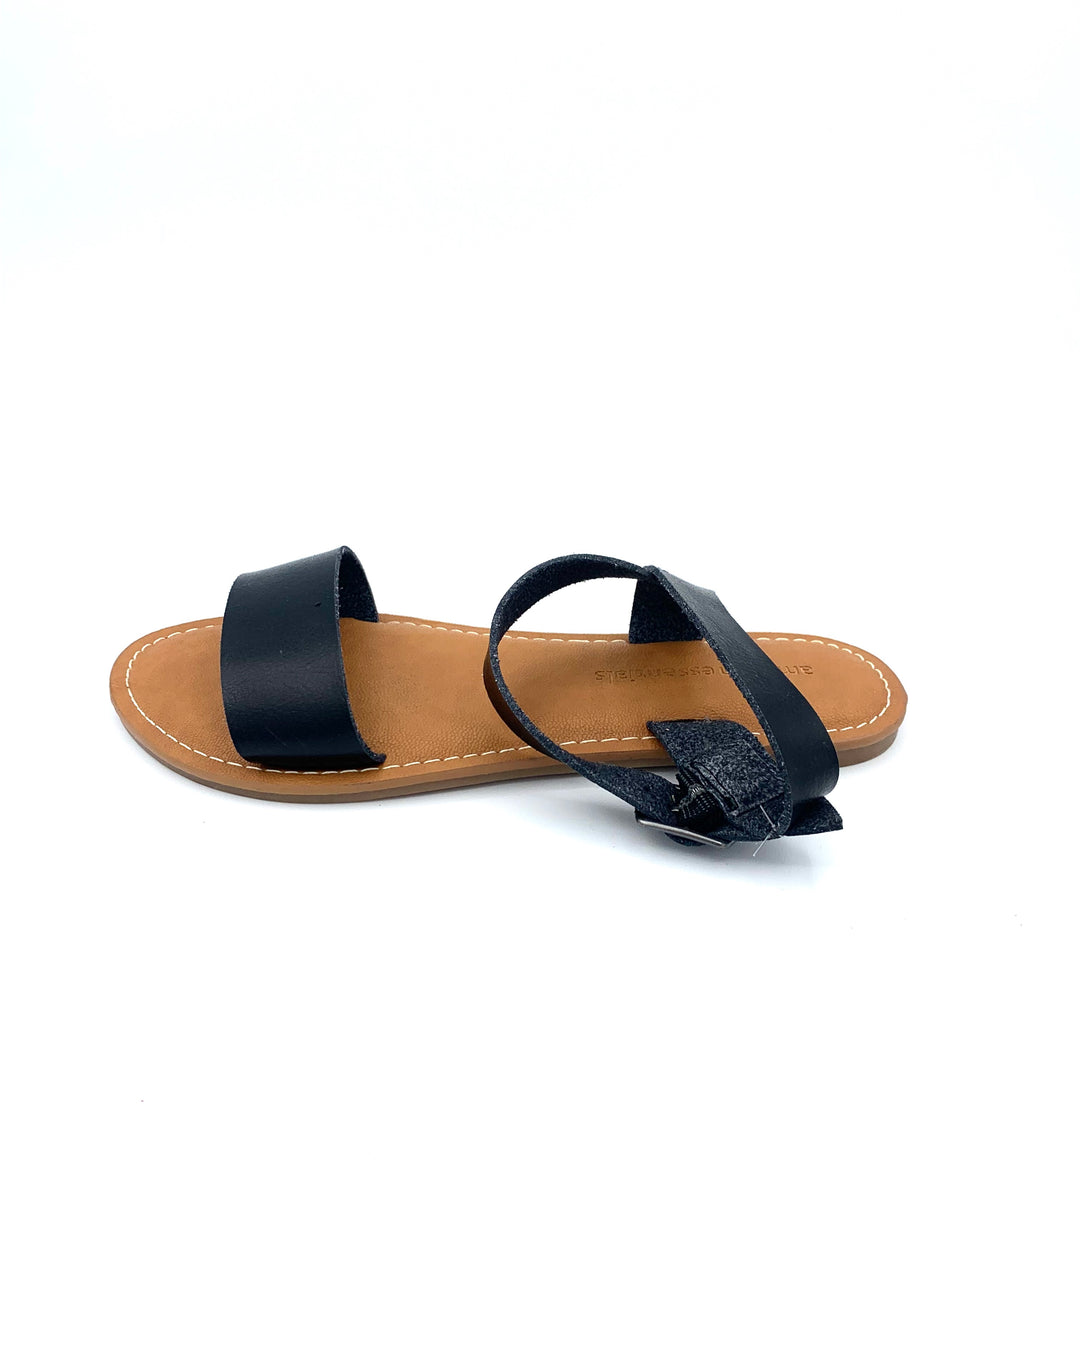 Black Strap Sandals - Size 6